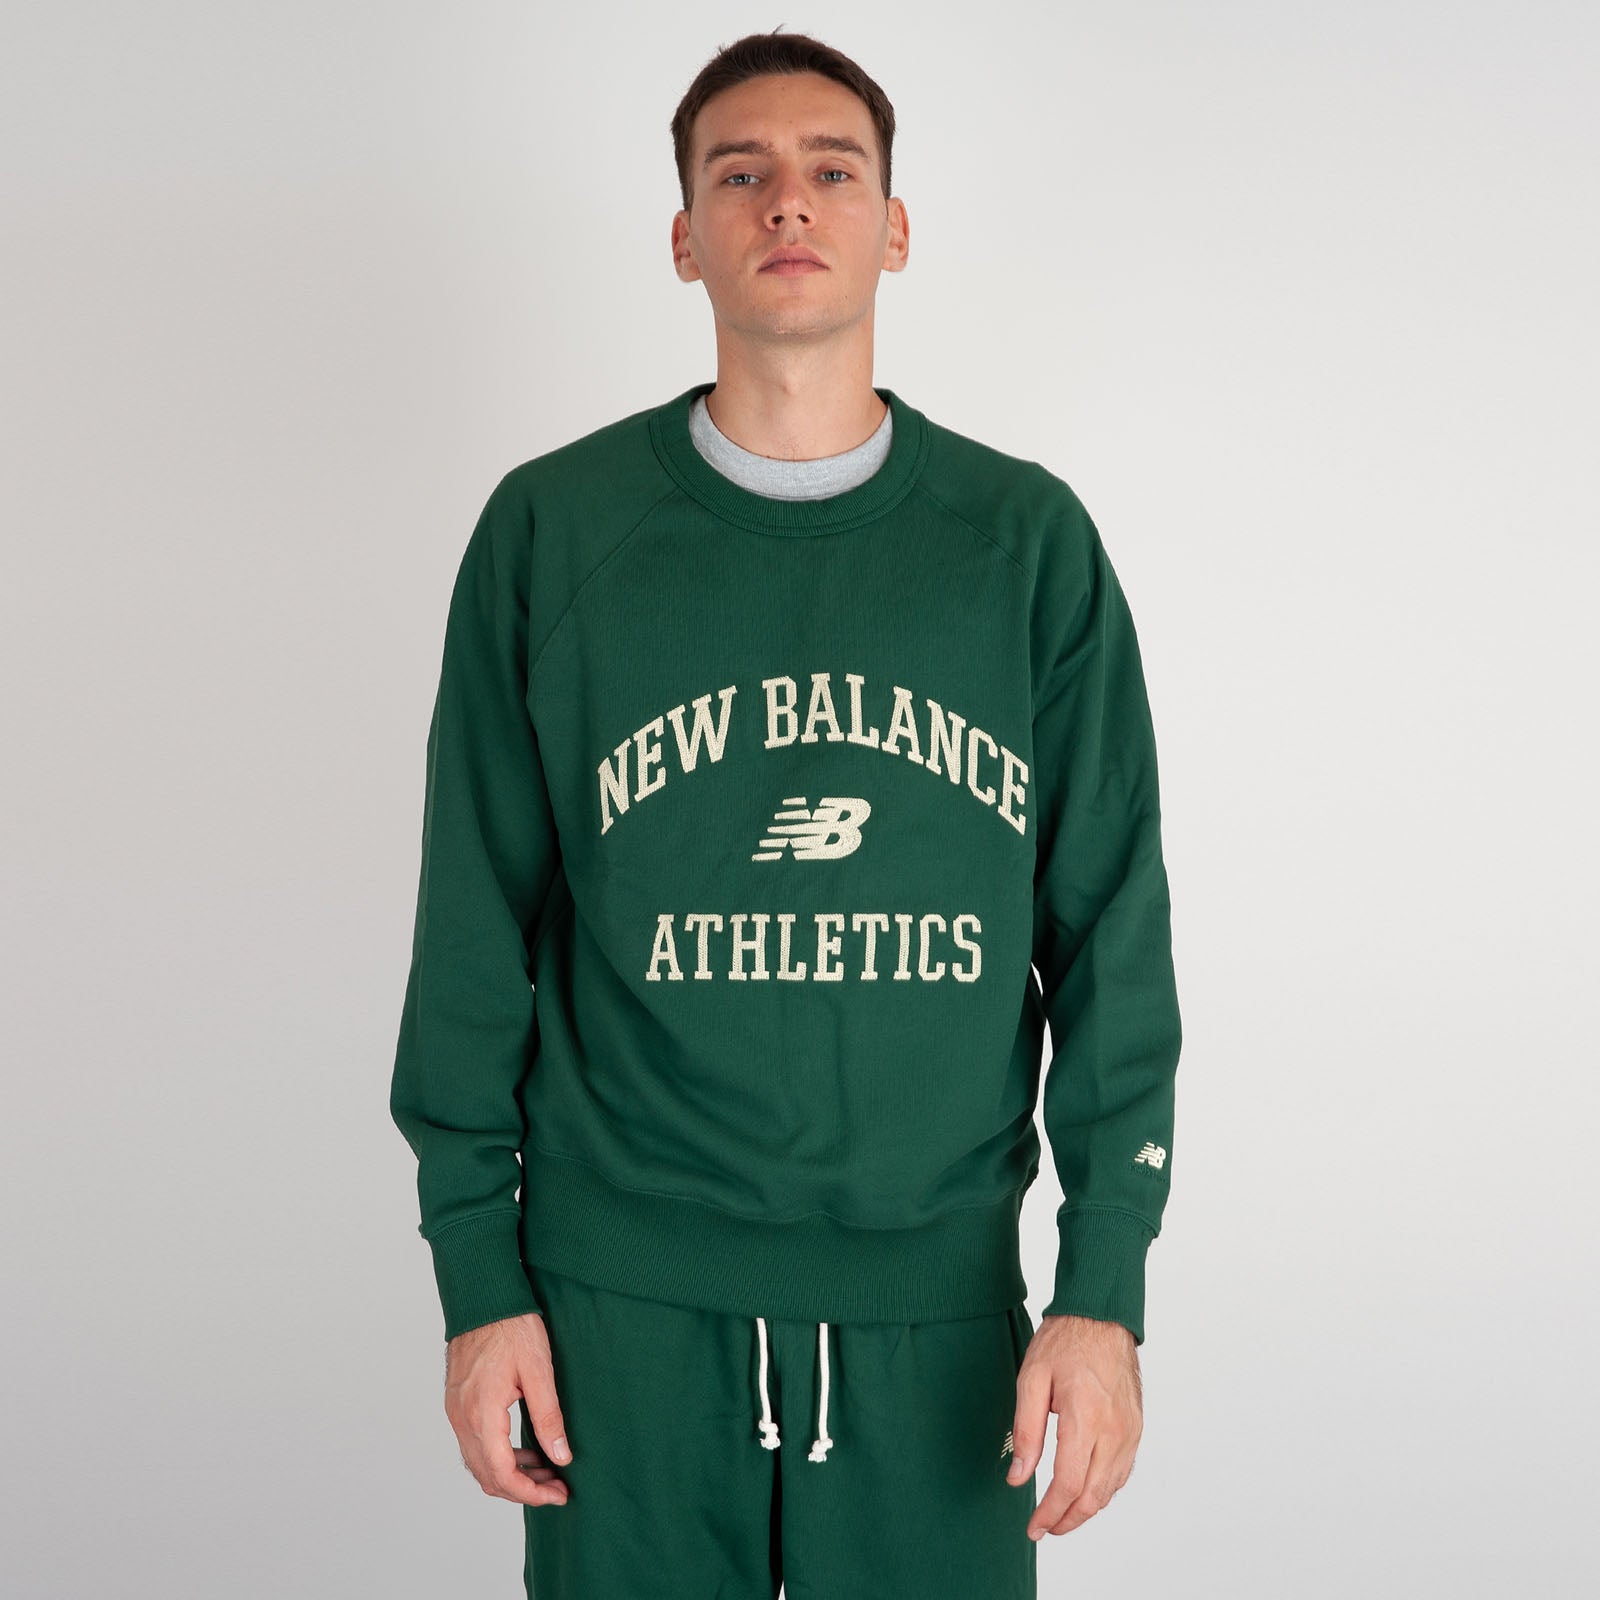 New Balance Athletics VarsityGreen Cotton Sweatshirt - 8